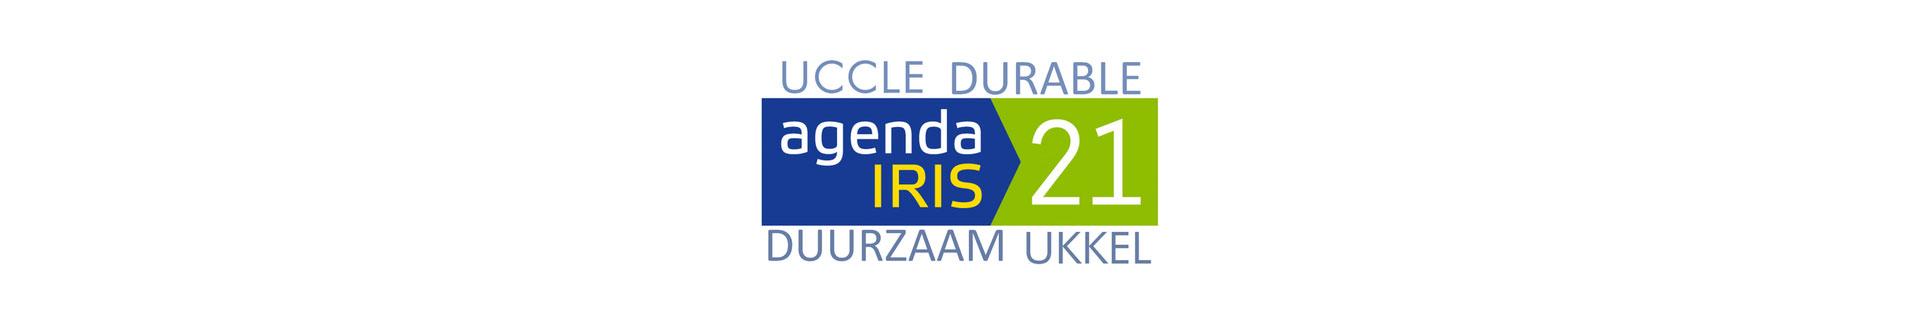 Bannière Agenda 21 - Logo Agenda 21